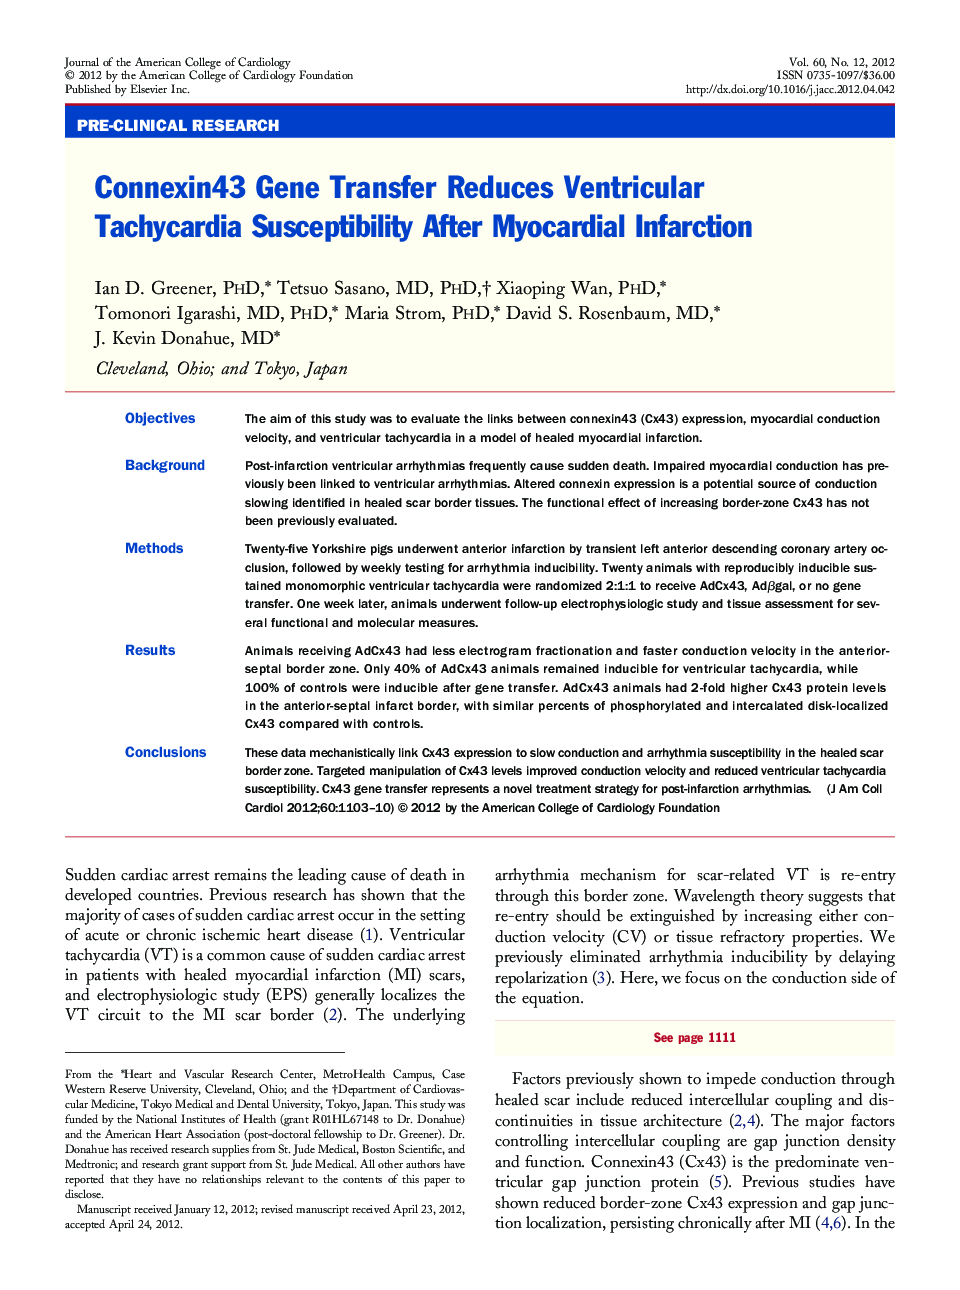 Connexin43 Gene Transfer Reduces Ventricular Tachycardia Susceptibility After Myocardial Infarction 